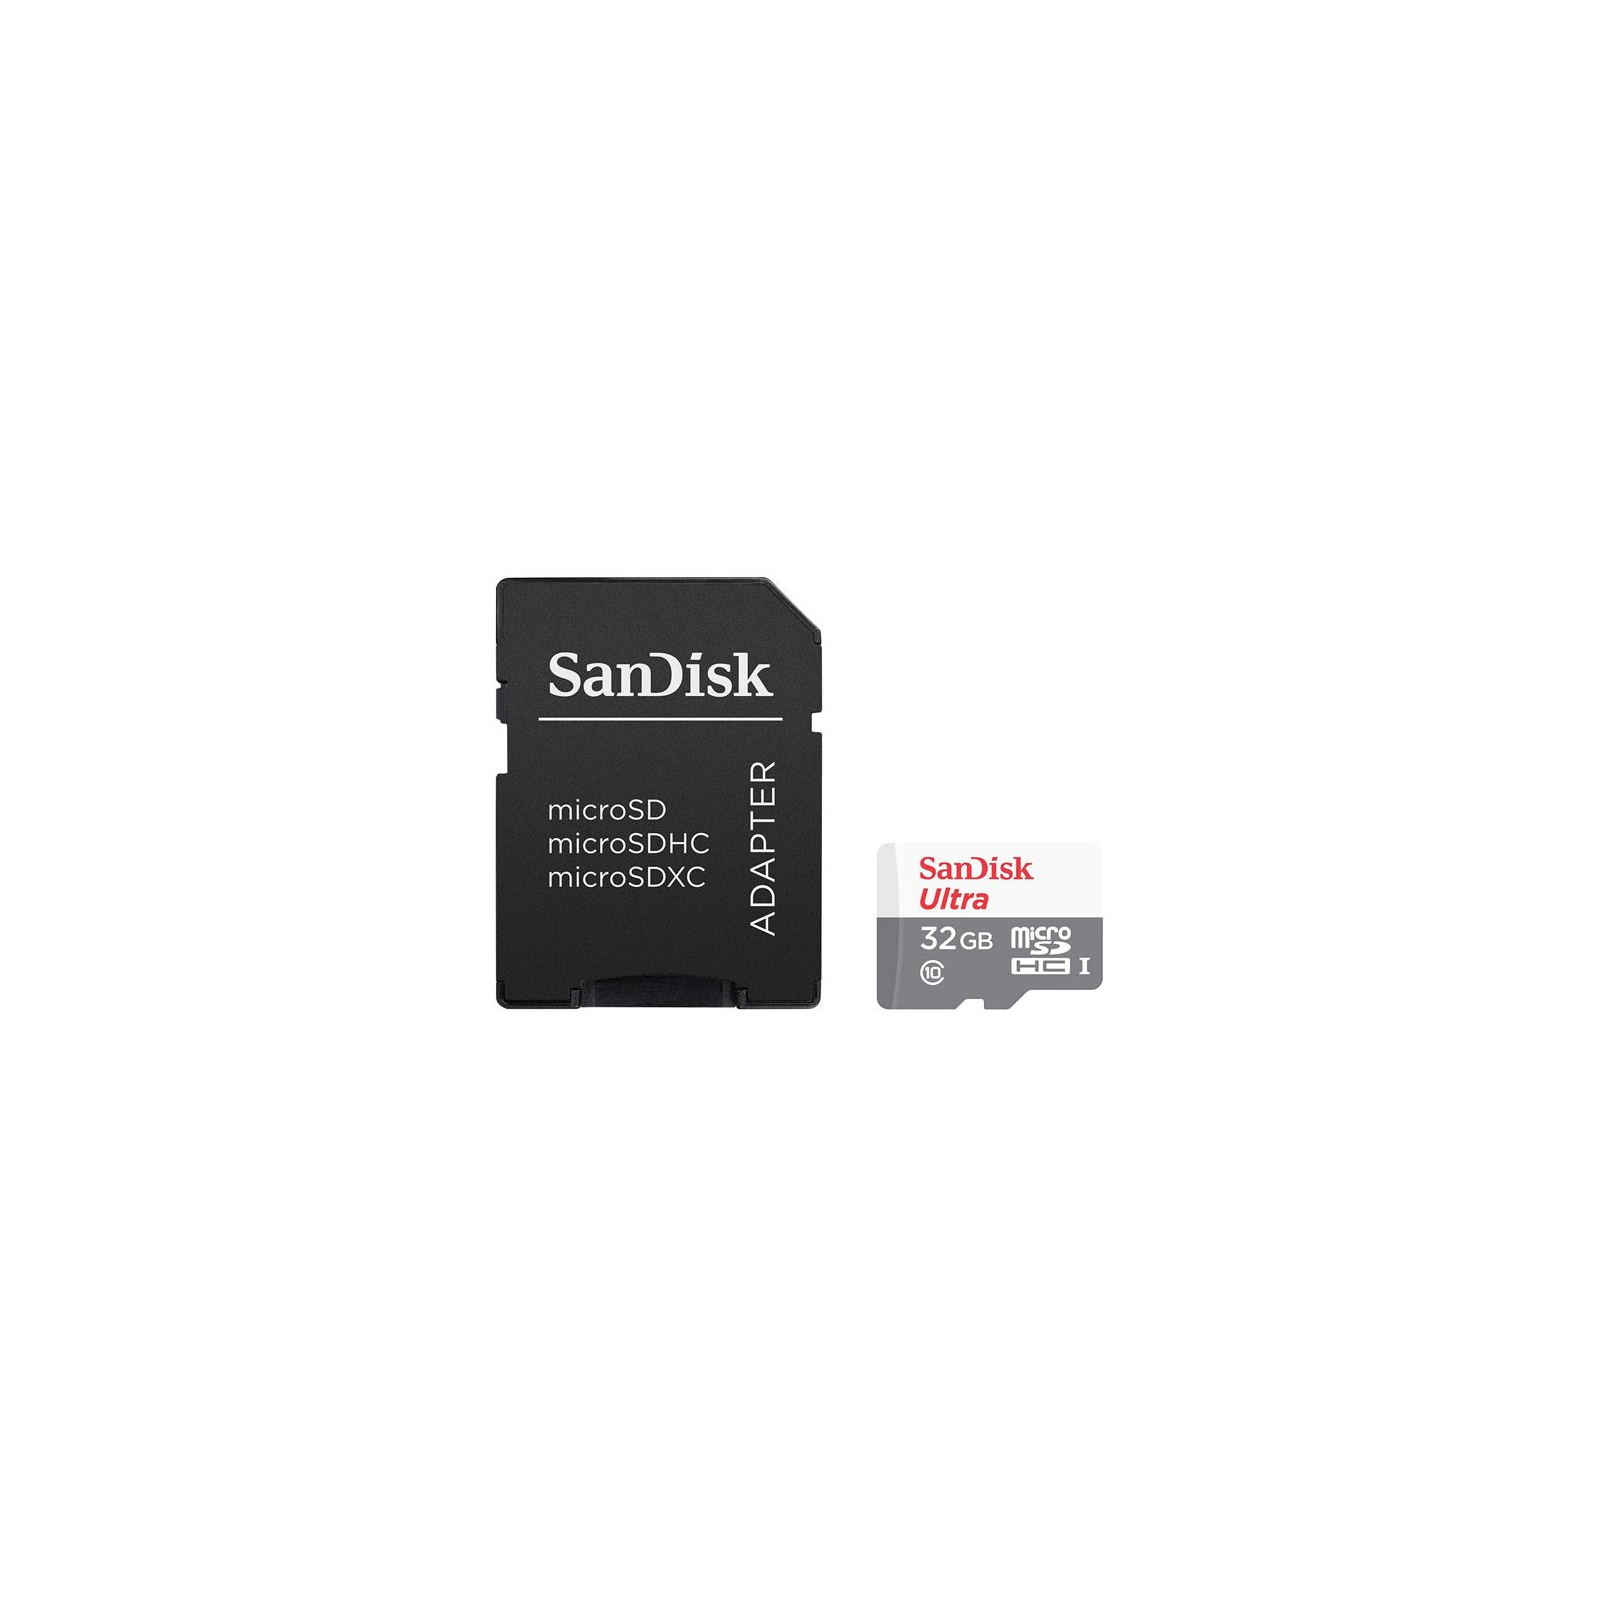 Карта памяти SanDisk 32GB Miсro-SDHC Class 10 UHS-I Ultra (SDSQUNS-032G-GN3MA)